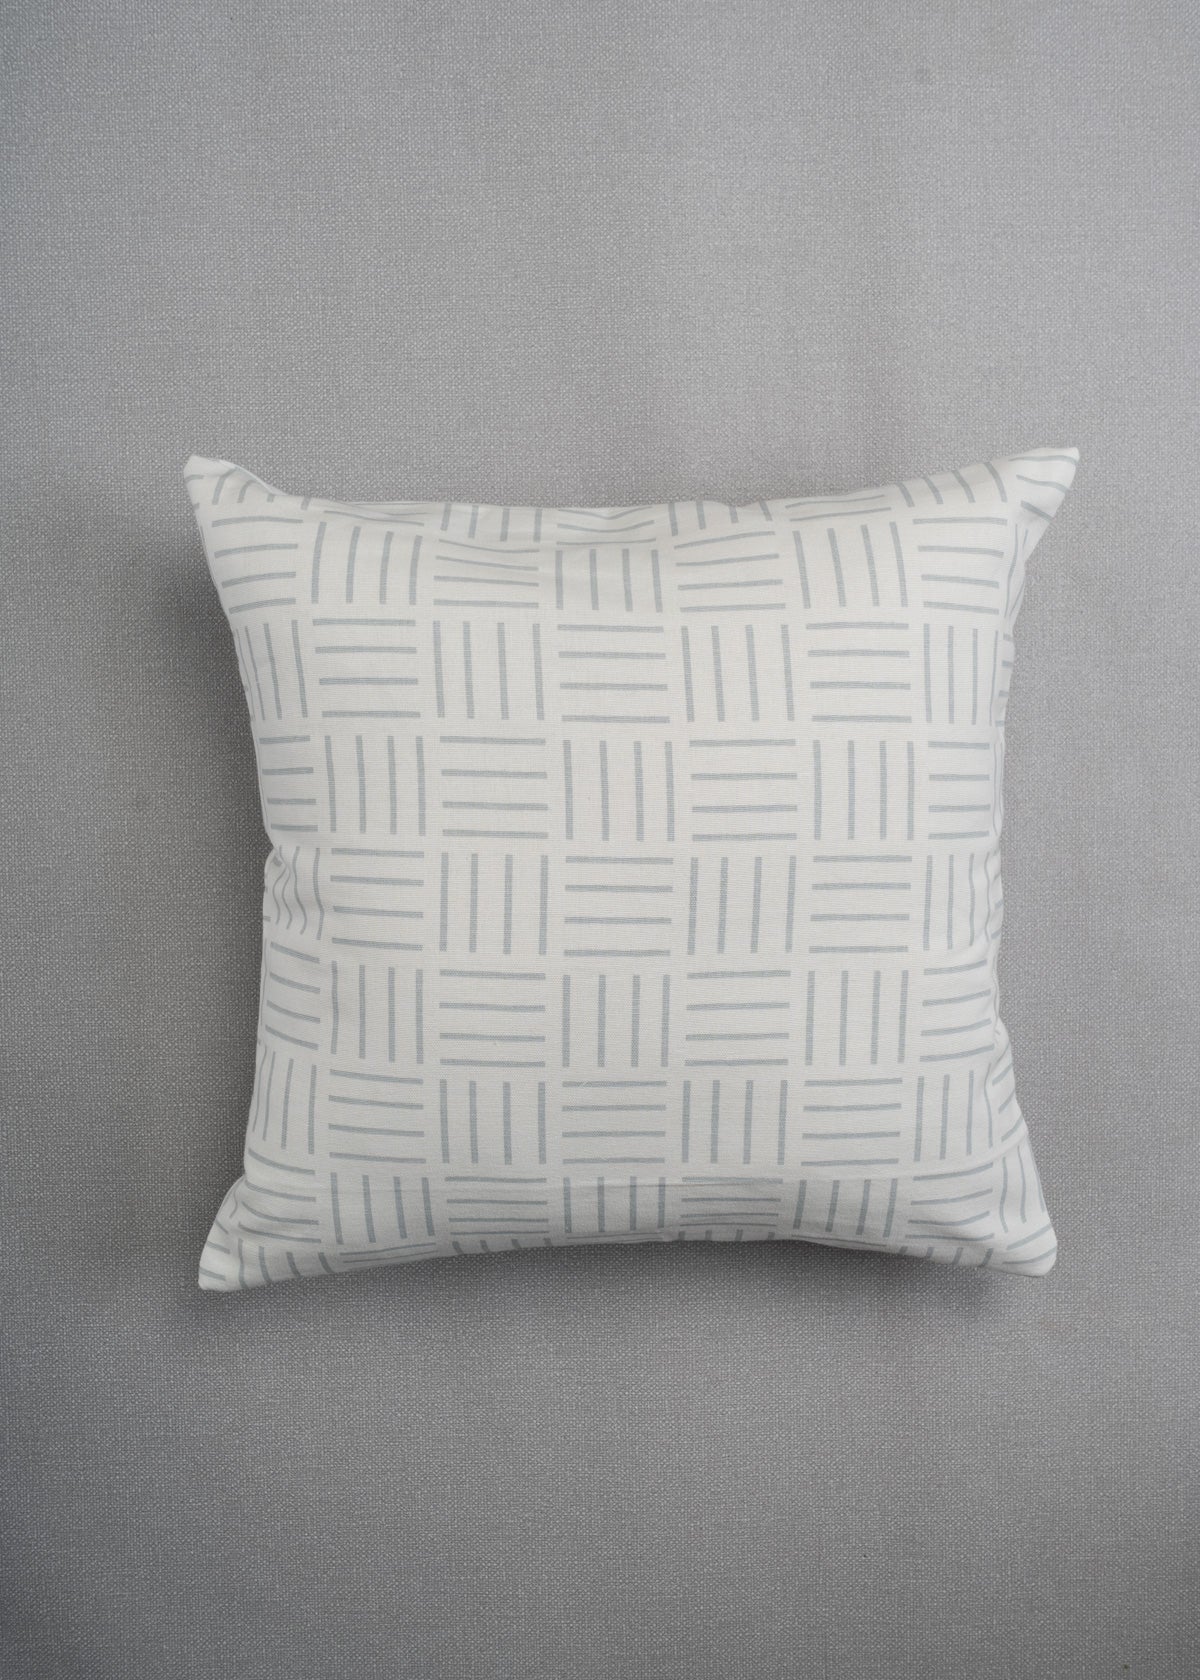 Hashlines Printed Cotton Cushion Cover - Grey